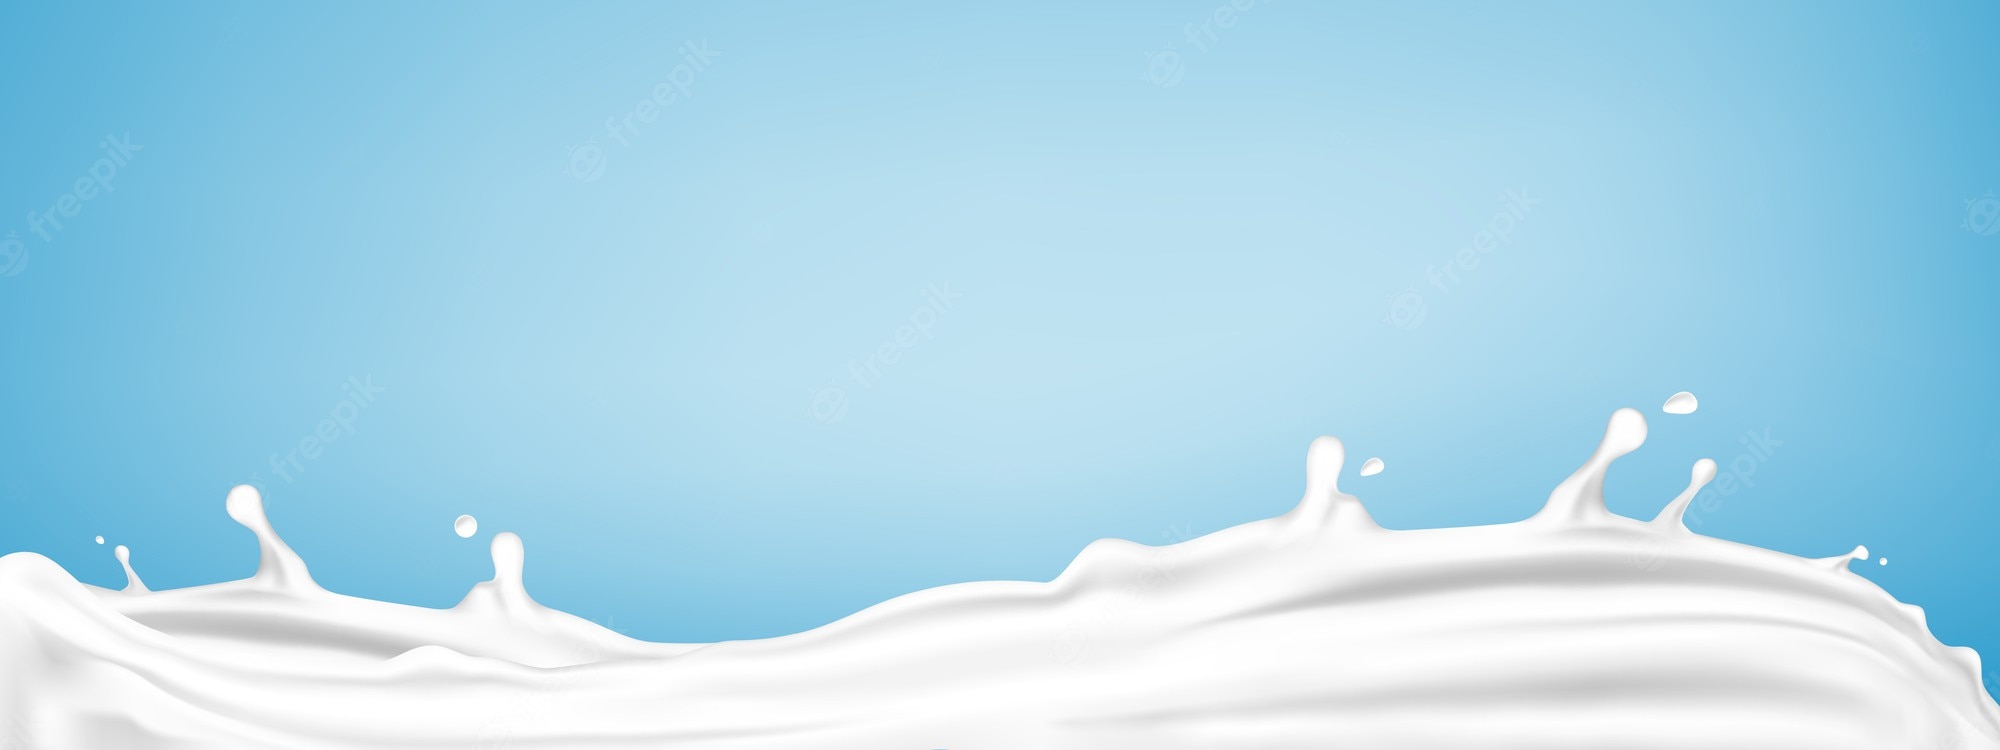 Milk flow Vectors & Illustrations for Free Download